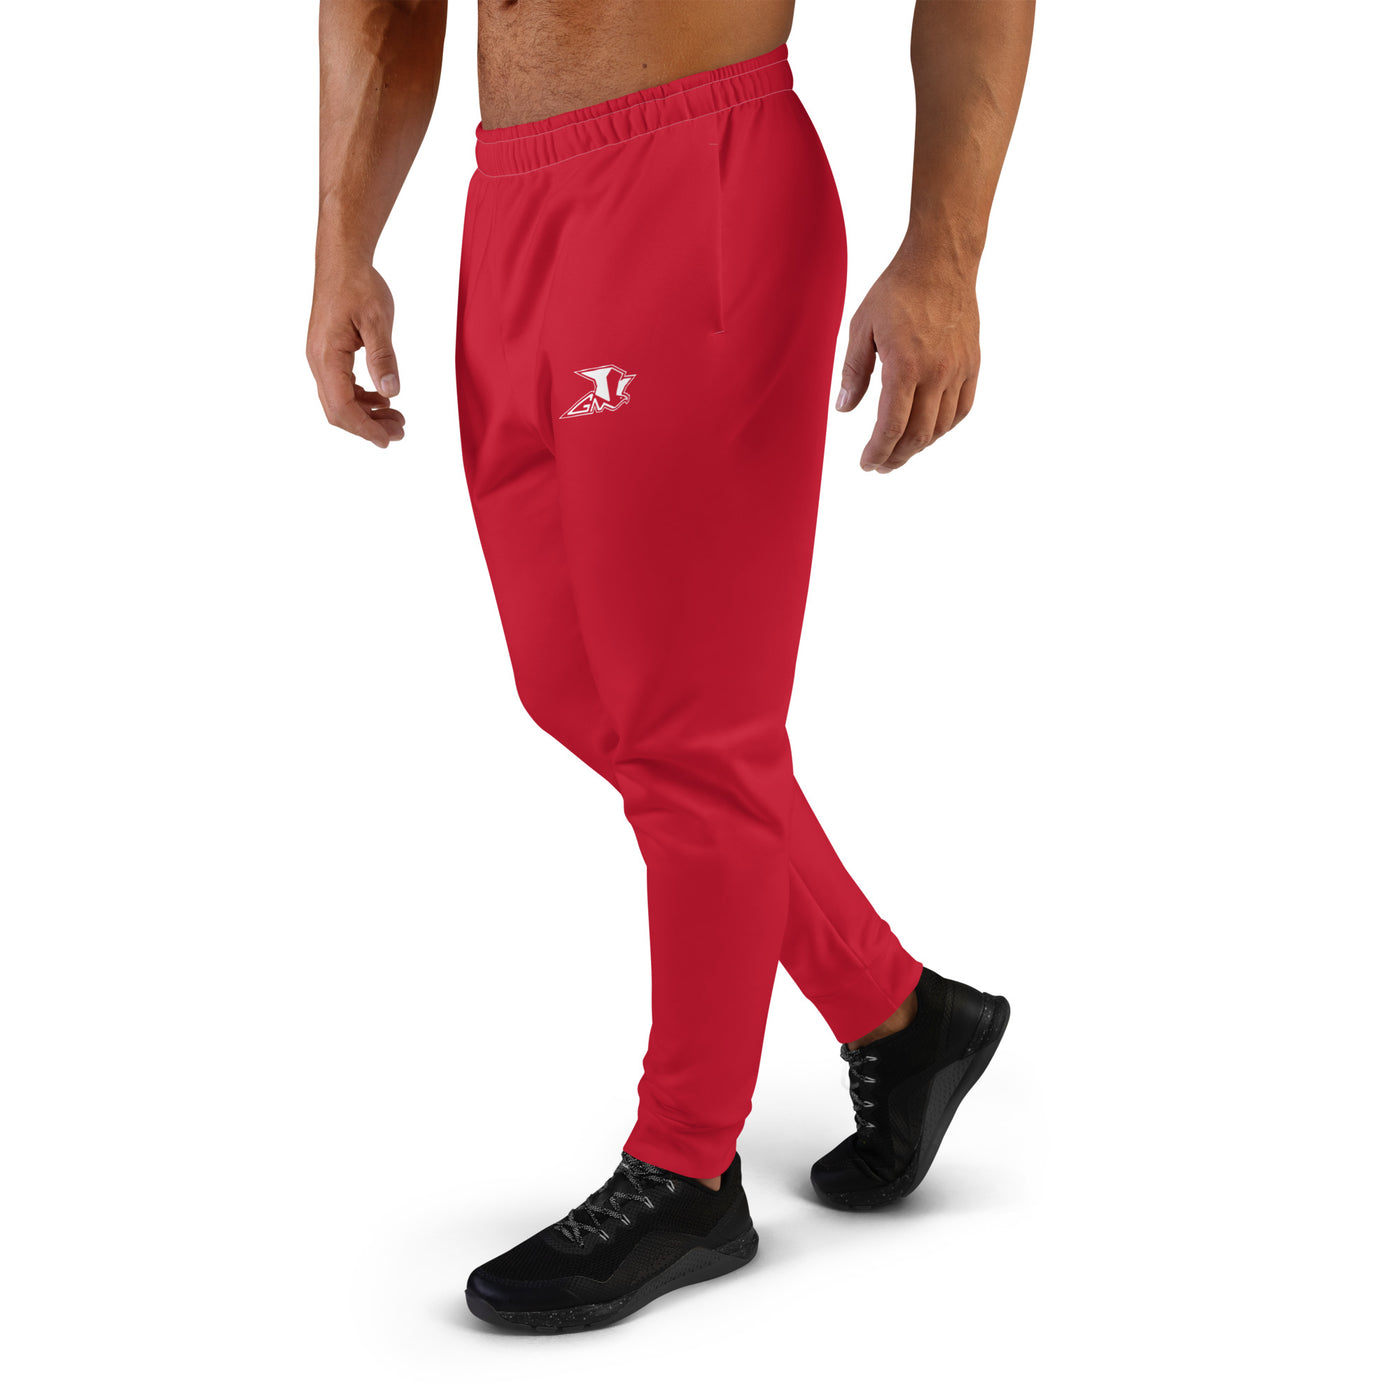 Gendo Milano Red Jogging Pants